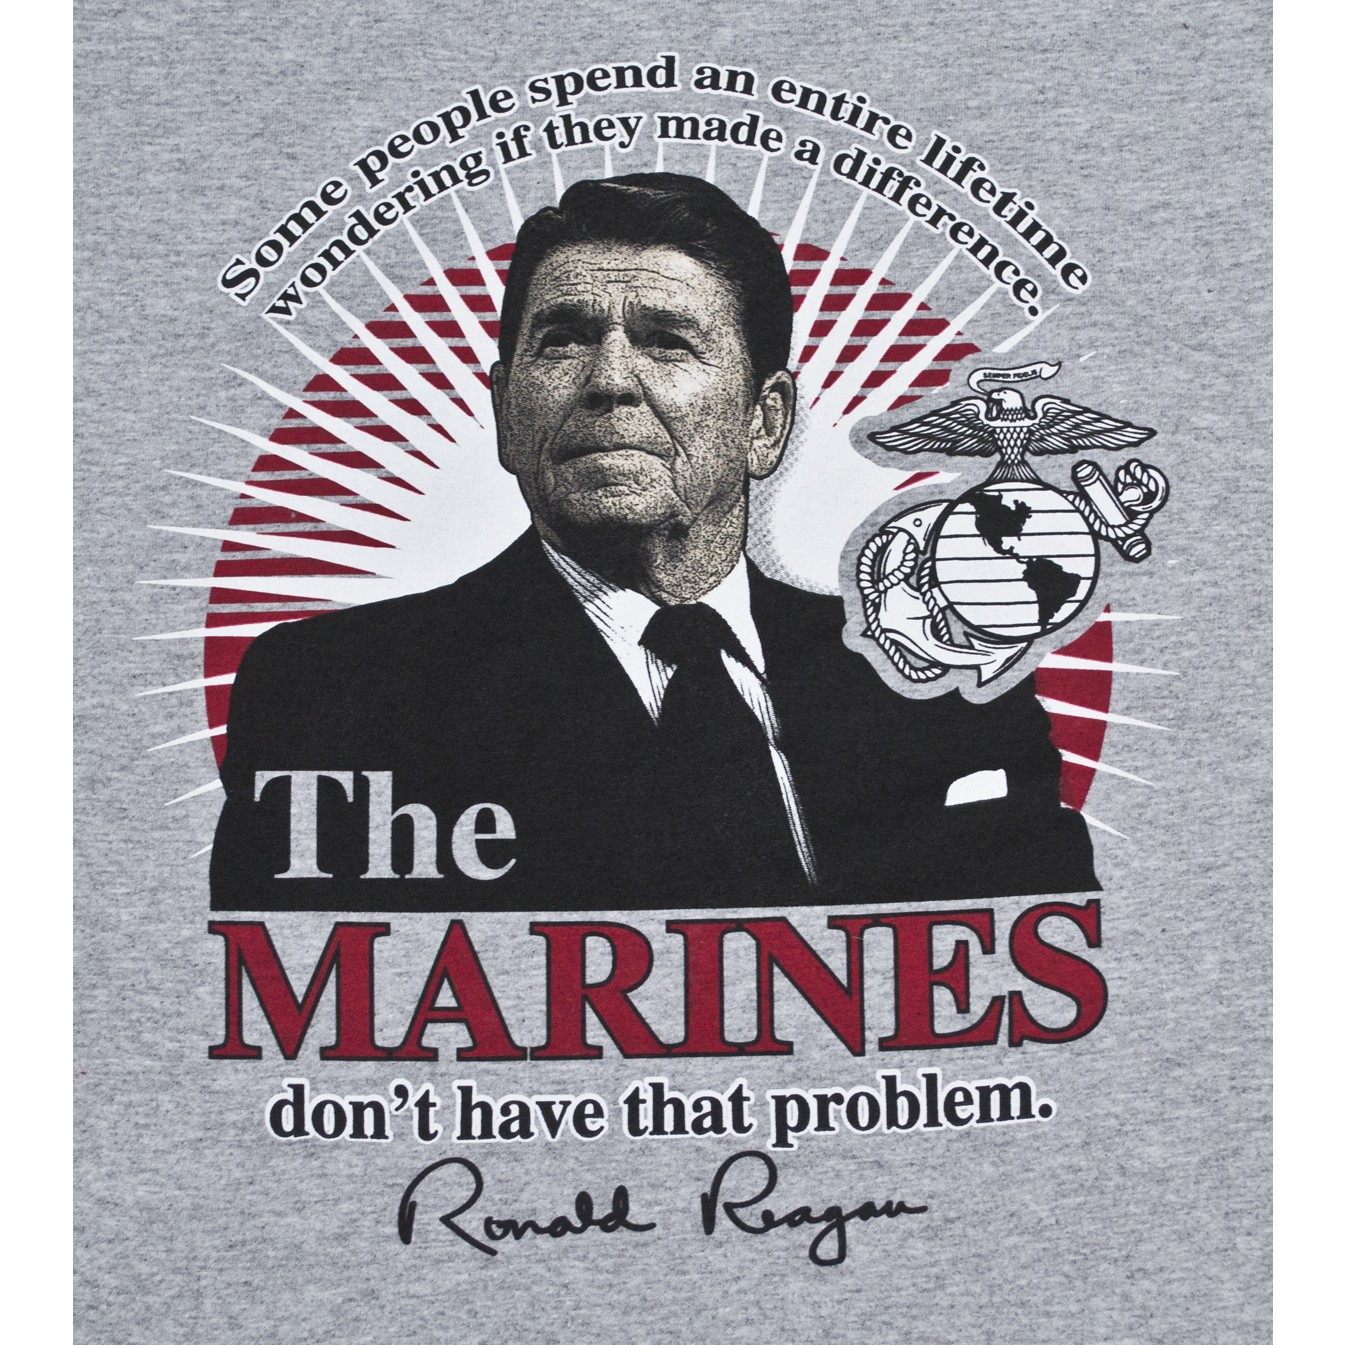 Ronald Reagan Quotes About The Marines Quotesgram